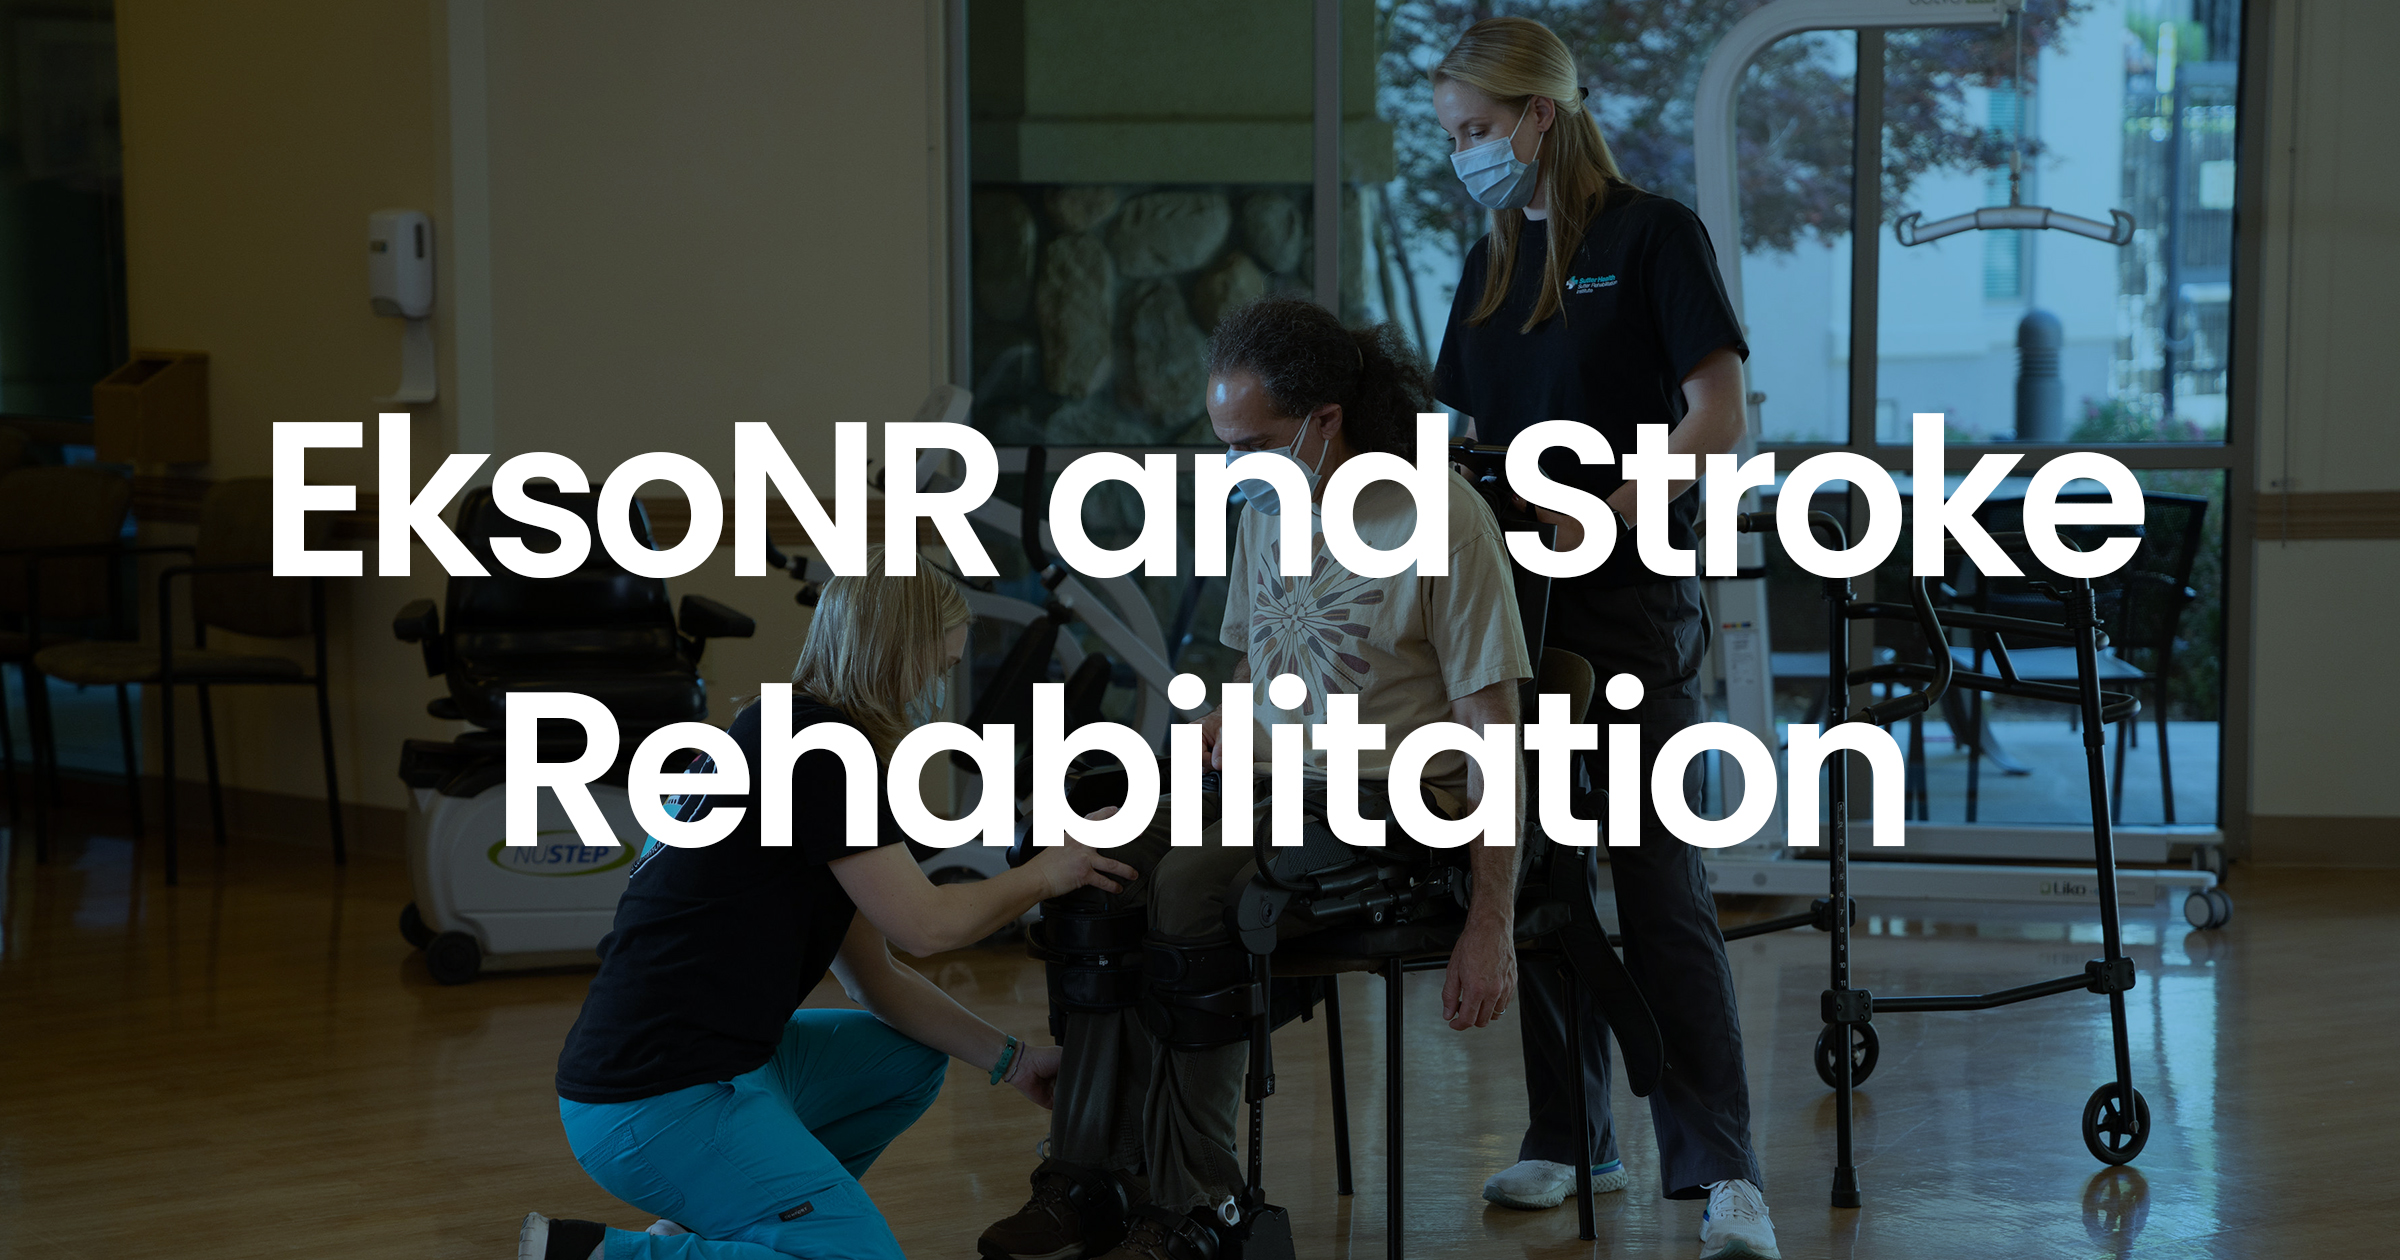 EksoNR and Stroke Rehabilitation